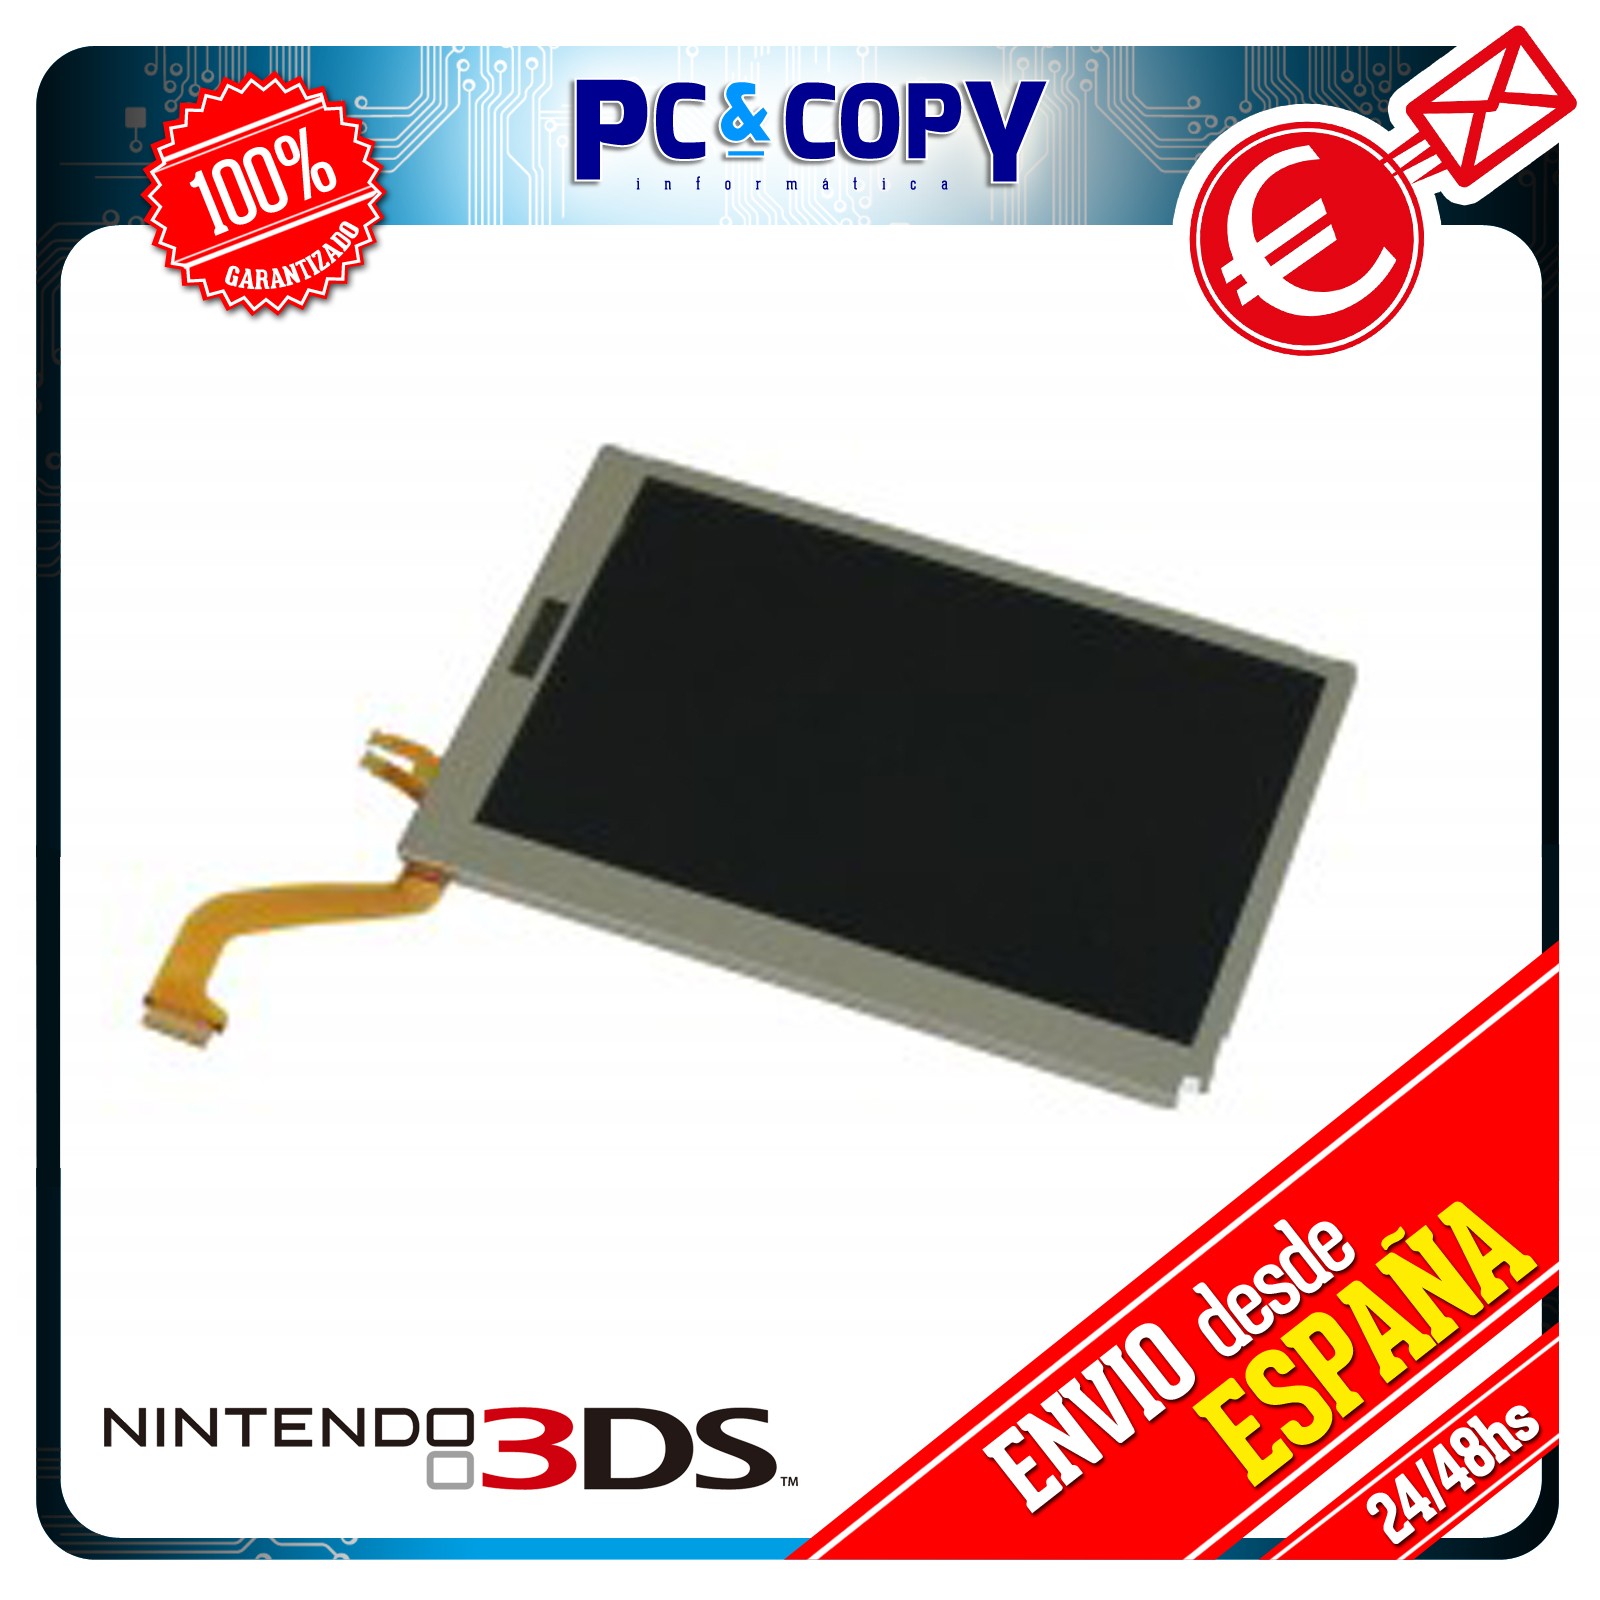 PANTALLA LCD NINTENDO 3DS SUPERIOR TOP DS NDS N3DS DISPLAY REPARACION CAMBIO - Pcycopy